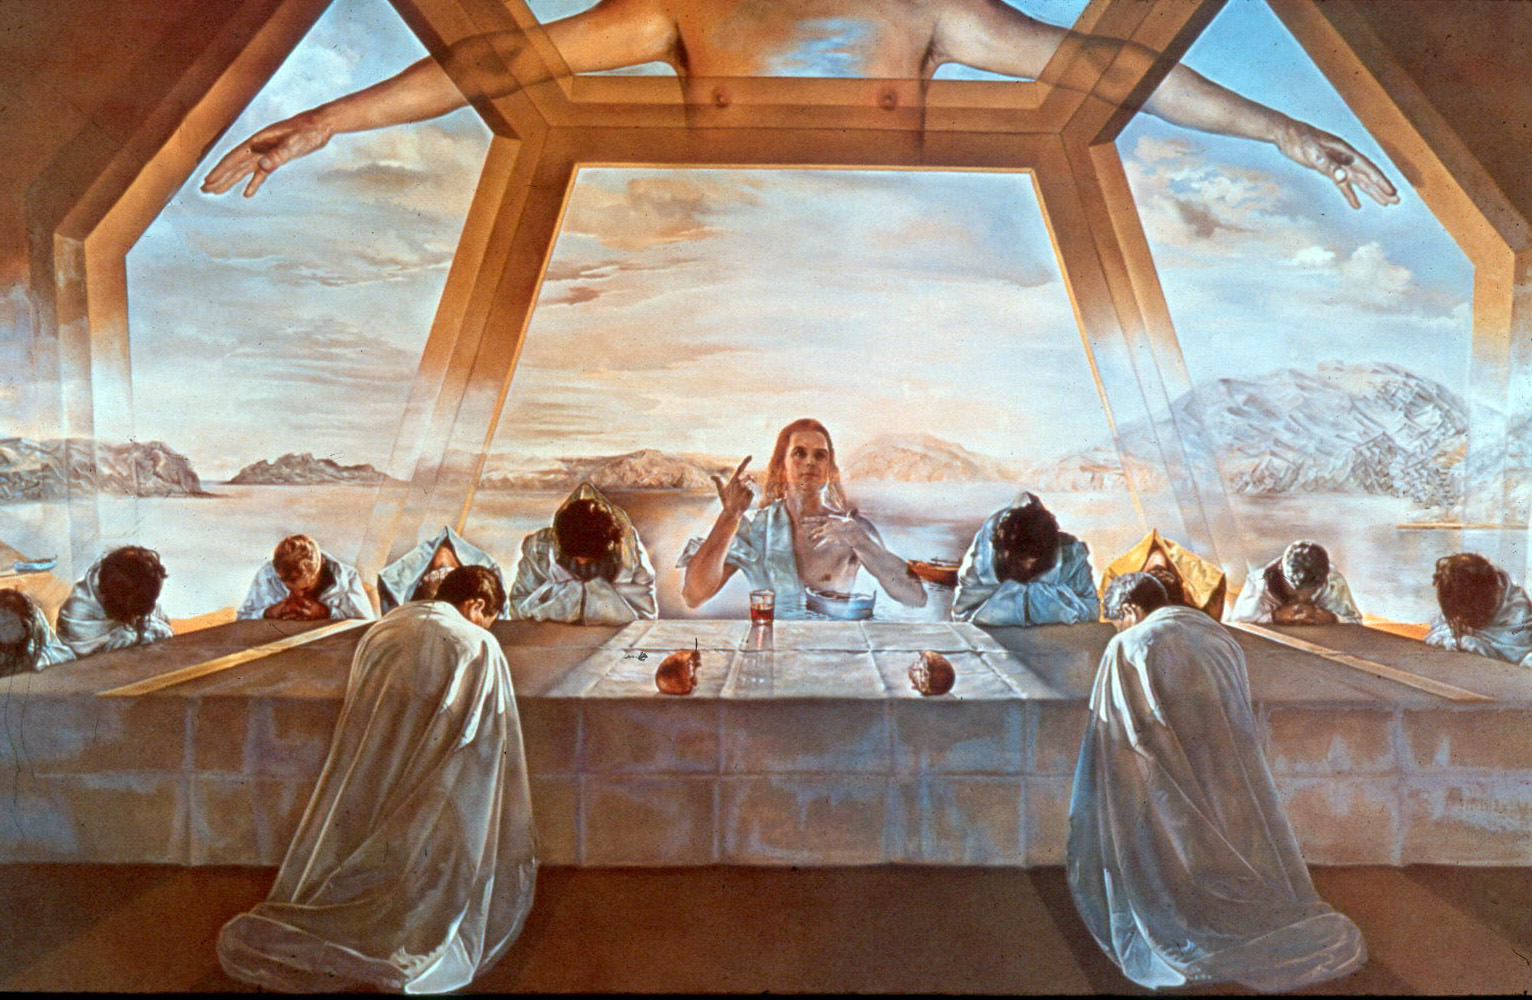 http://3.bp.blogspot.com/-vKVBjUhFDpI/TwzQ4HKws0I/AAAAAAAAAC4/aylOthdMoq4/s1600/dali-sacrament-of-the-last-supper-1955.jpg